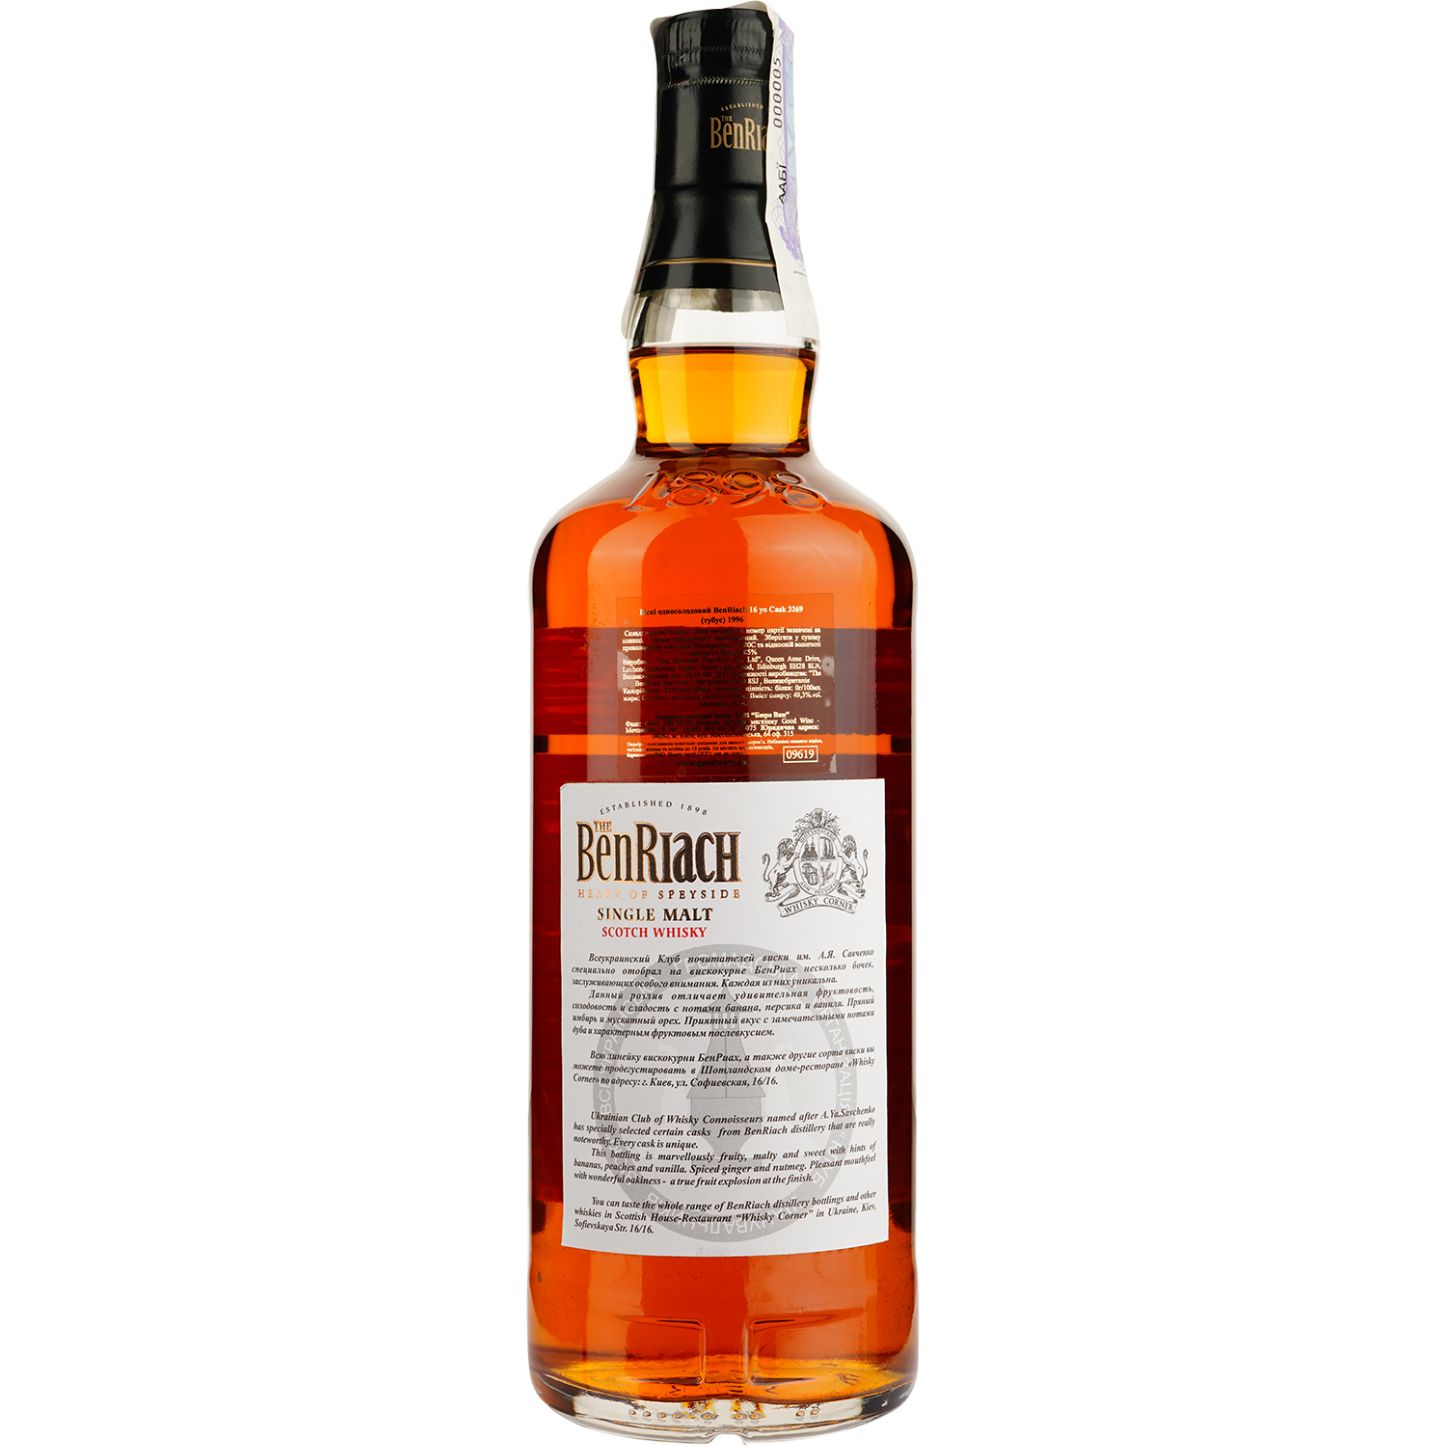 Віскі BenRiach 16 Years Old Virgin Oak Hogshead Cask 3269 Single Malt Scotch Whisky, у подарунковій упаковці, 49,3%, 0,7 л - фото 4